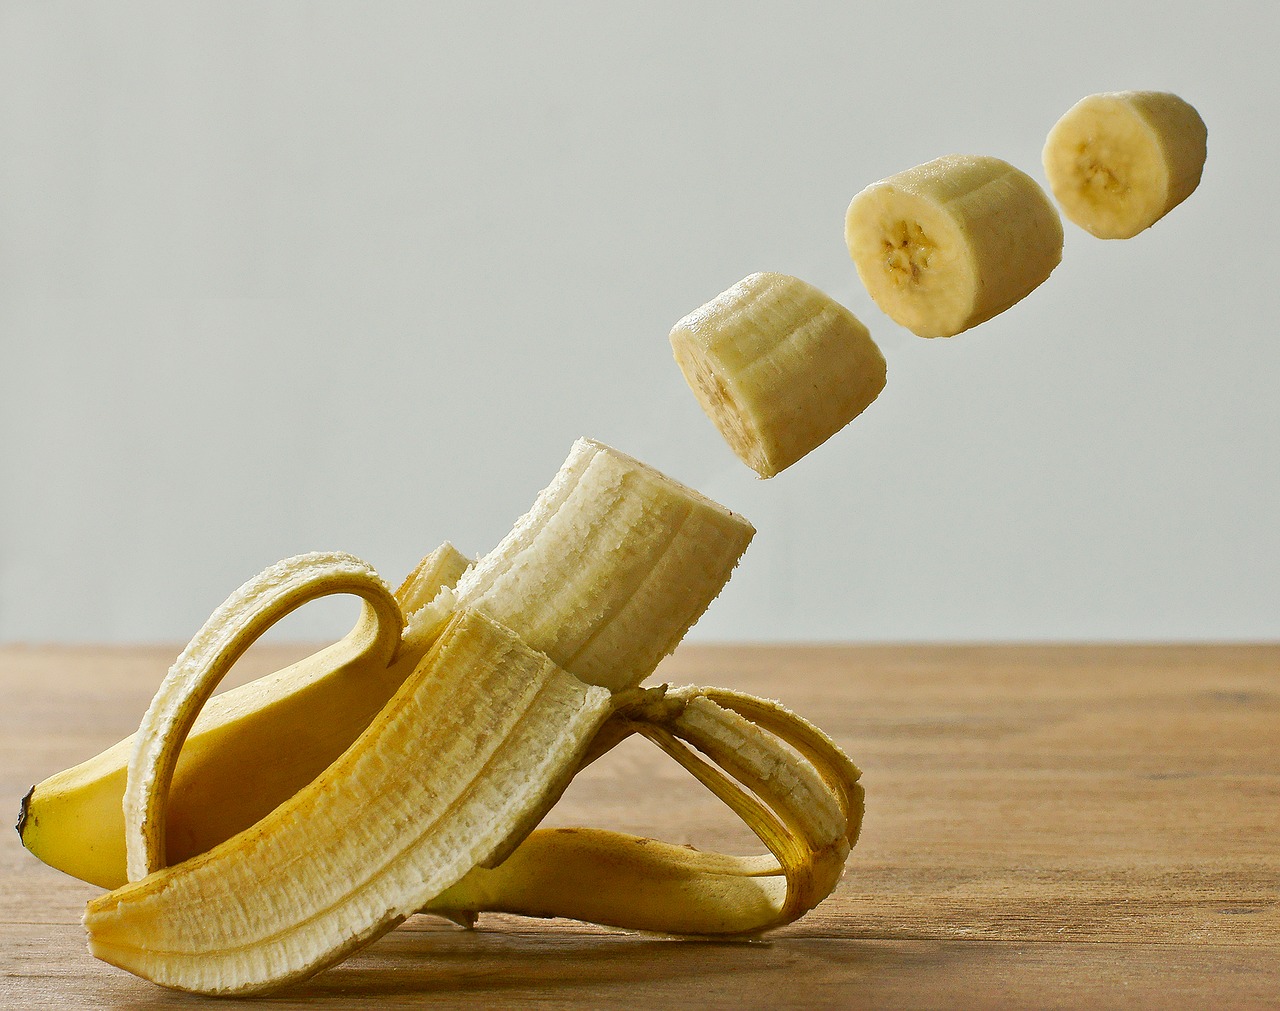 Cum sa consumi bananele ca sa slabesti - recomandarea unui nutritionist - Andreea Raicu